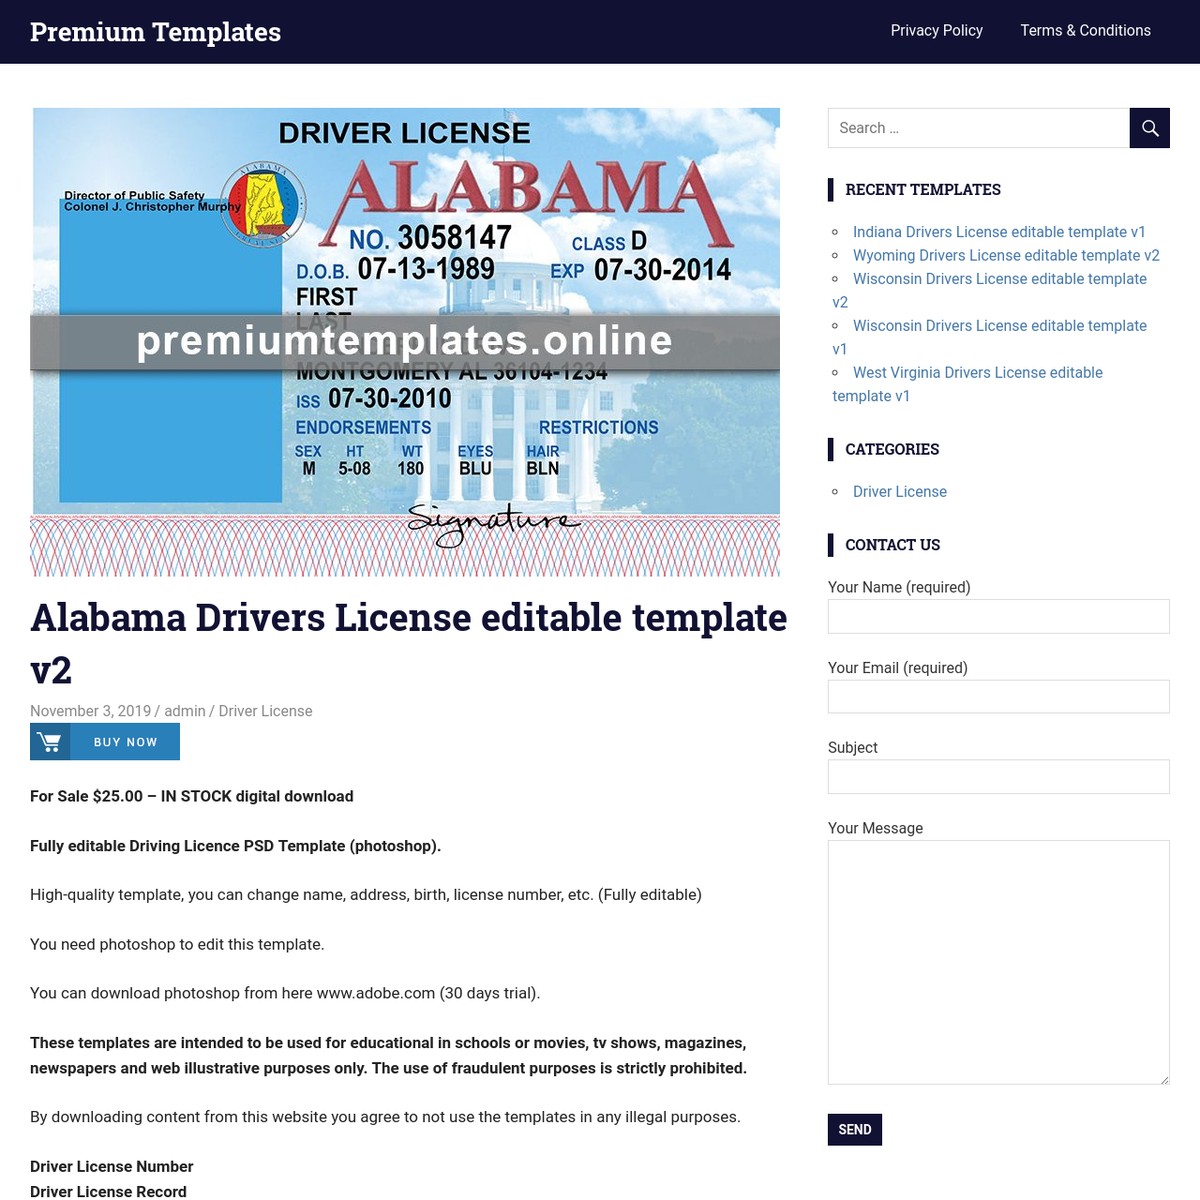 Alabama Drivers License Editable Template V2 — Arena